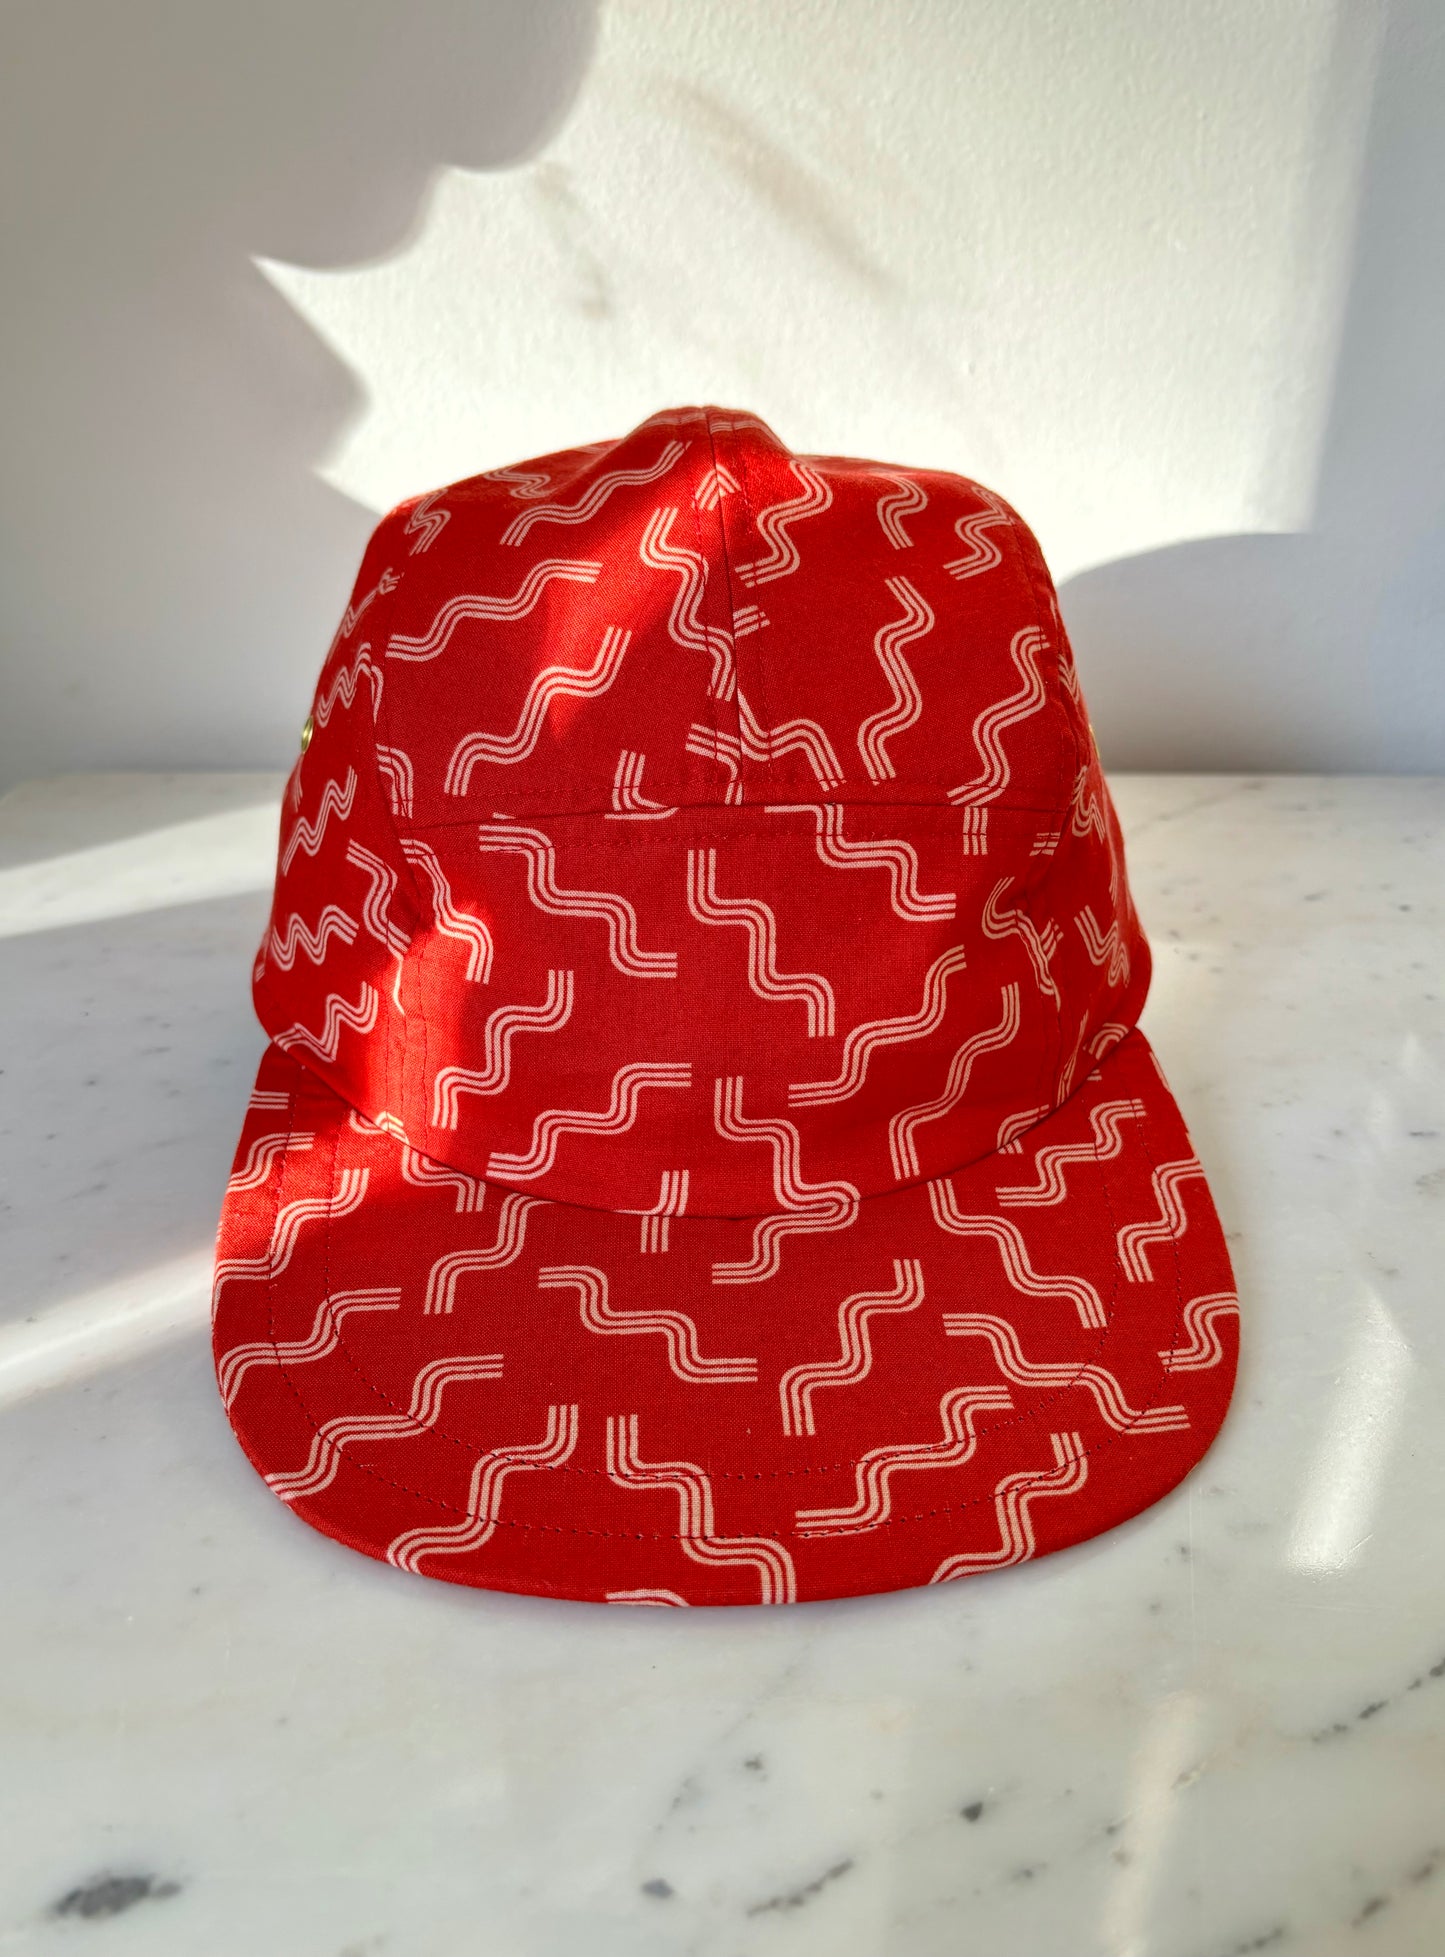 Olas print 5-panel hat